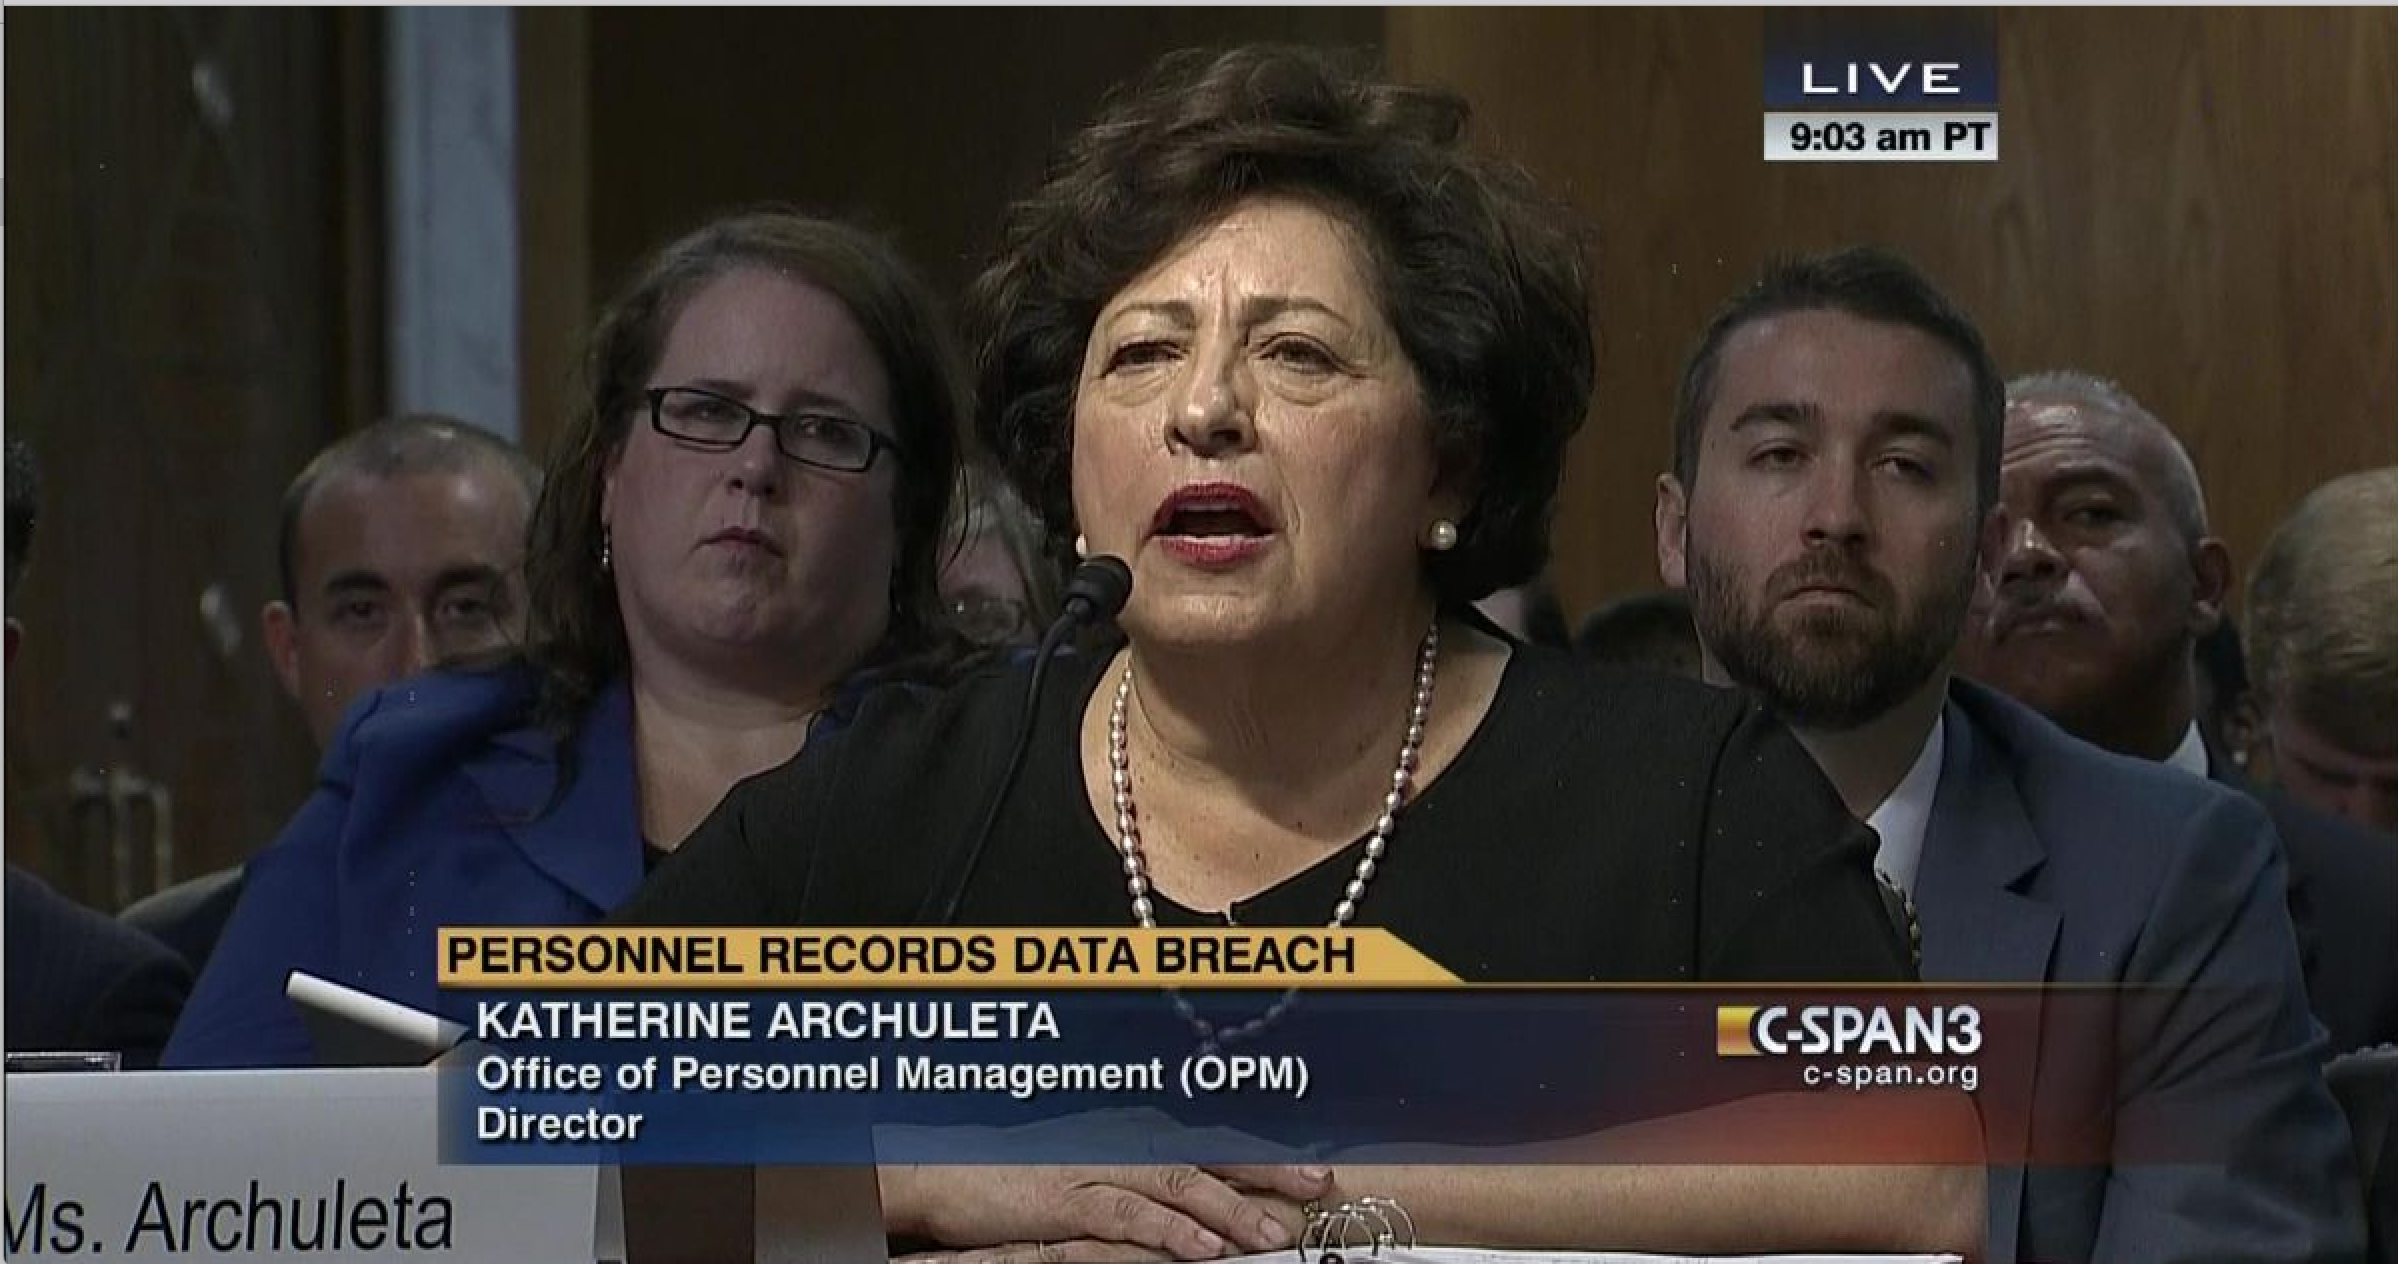 OPM Director Katherine Archuleta Resigns After Massive Personnel Data Breach Including 5.6 Million Fingerprints